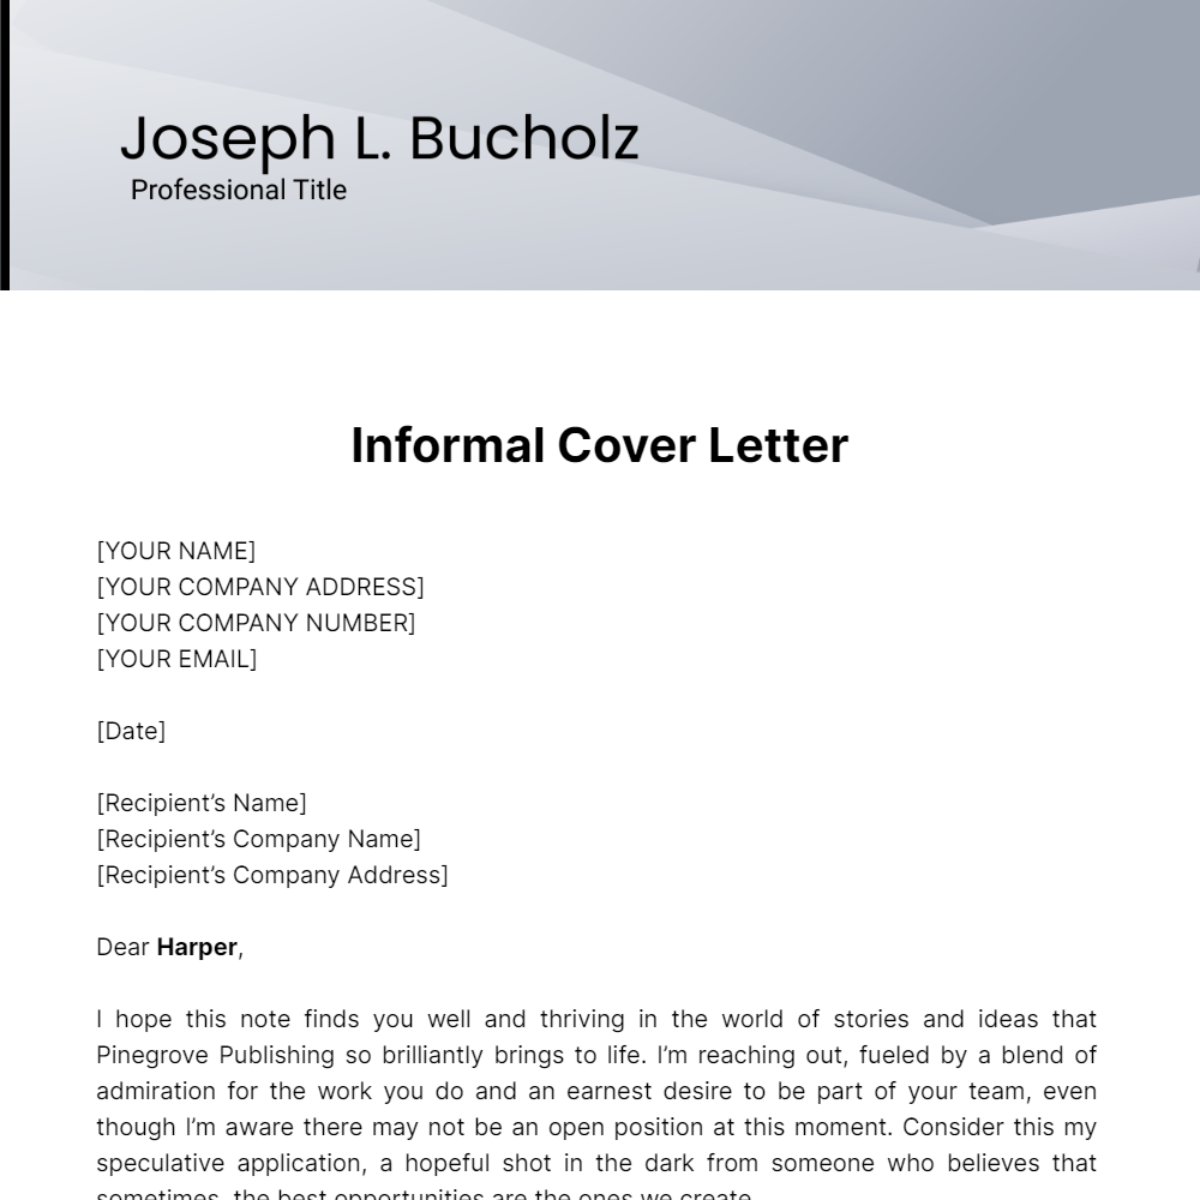 Informal Cover Letter Template